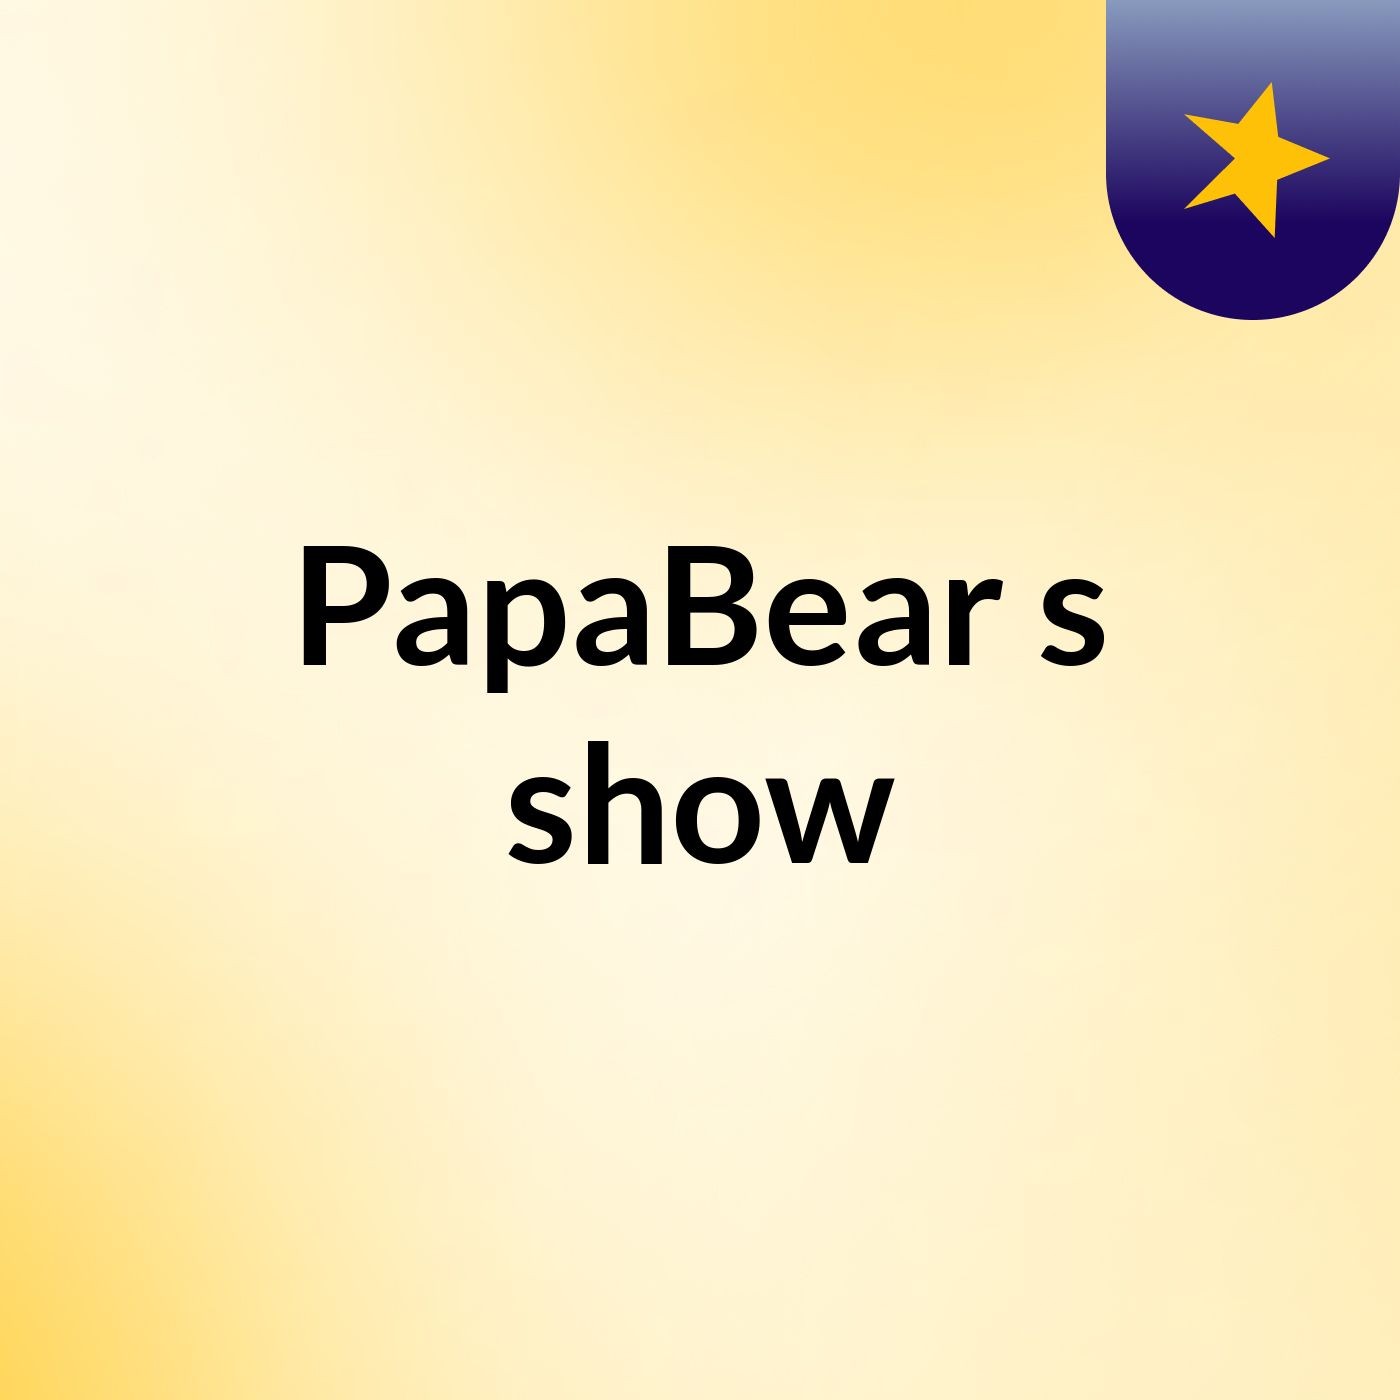 PapaBear's show